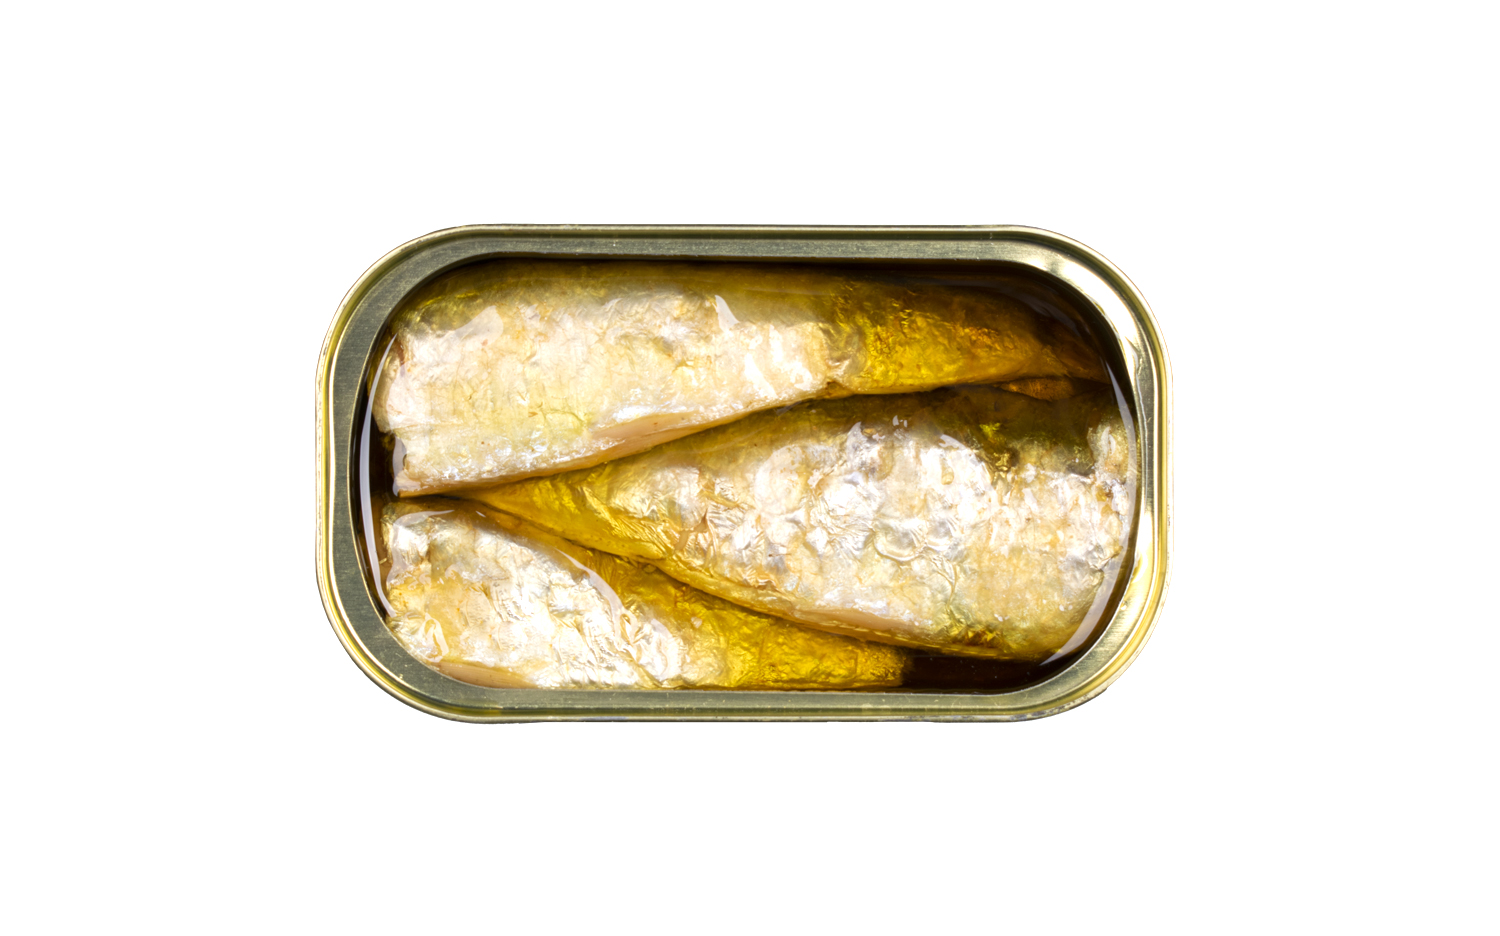 Sardines in Extra Virgin Olive Oil